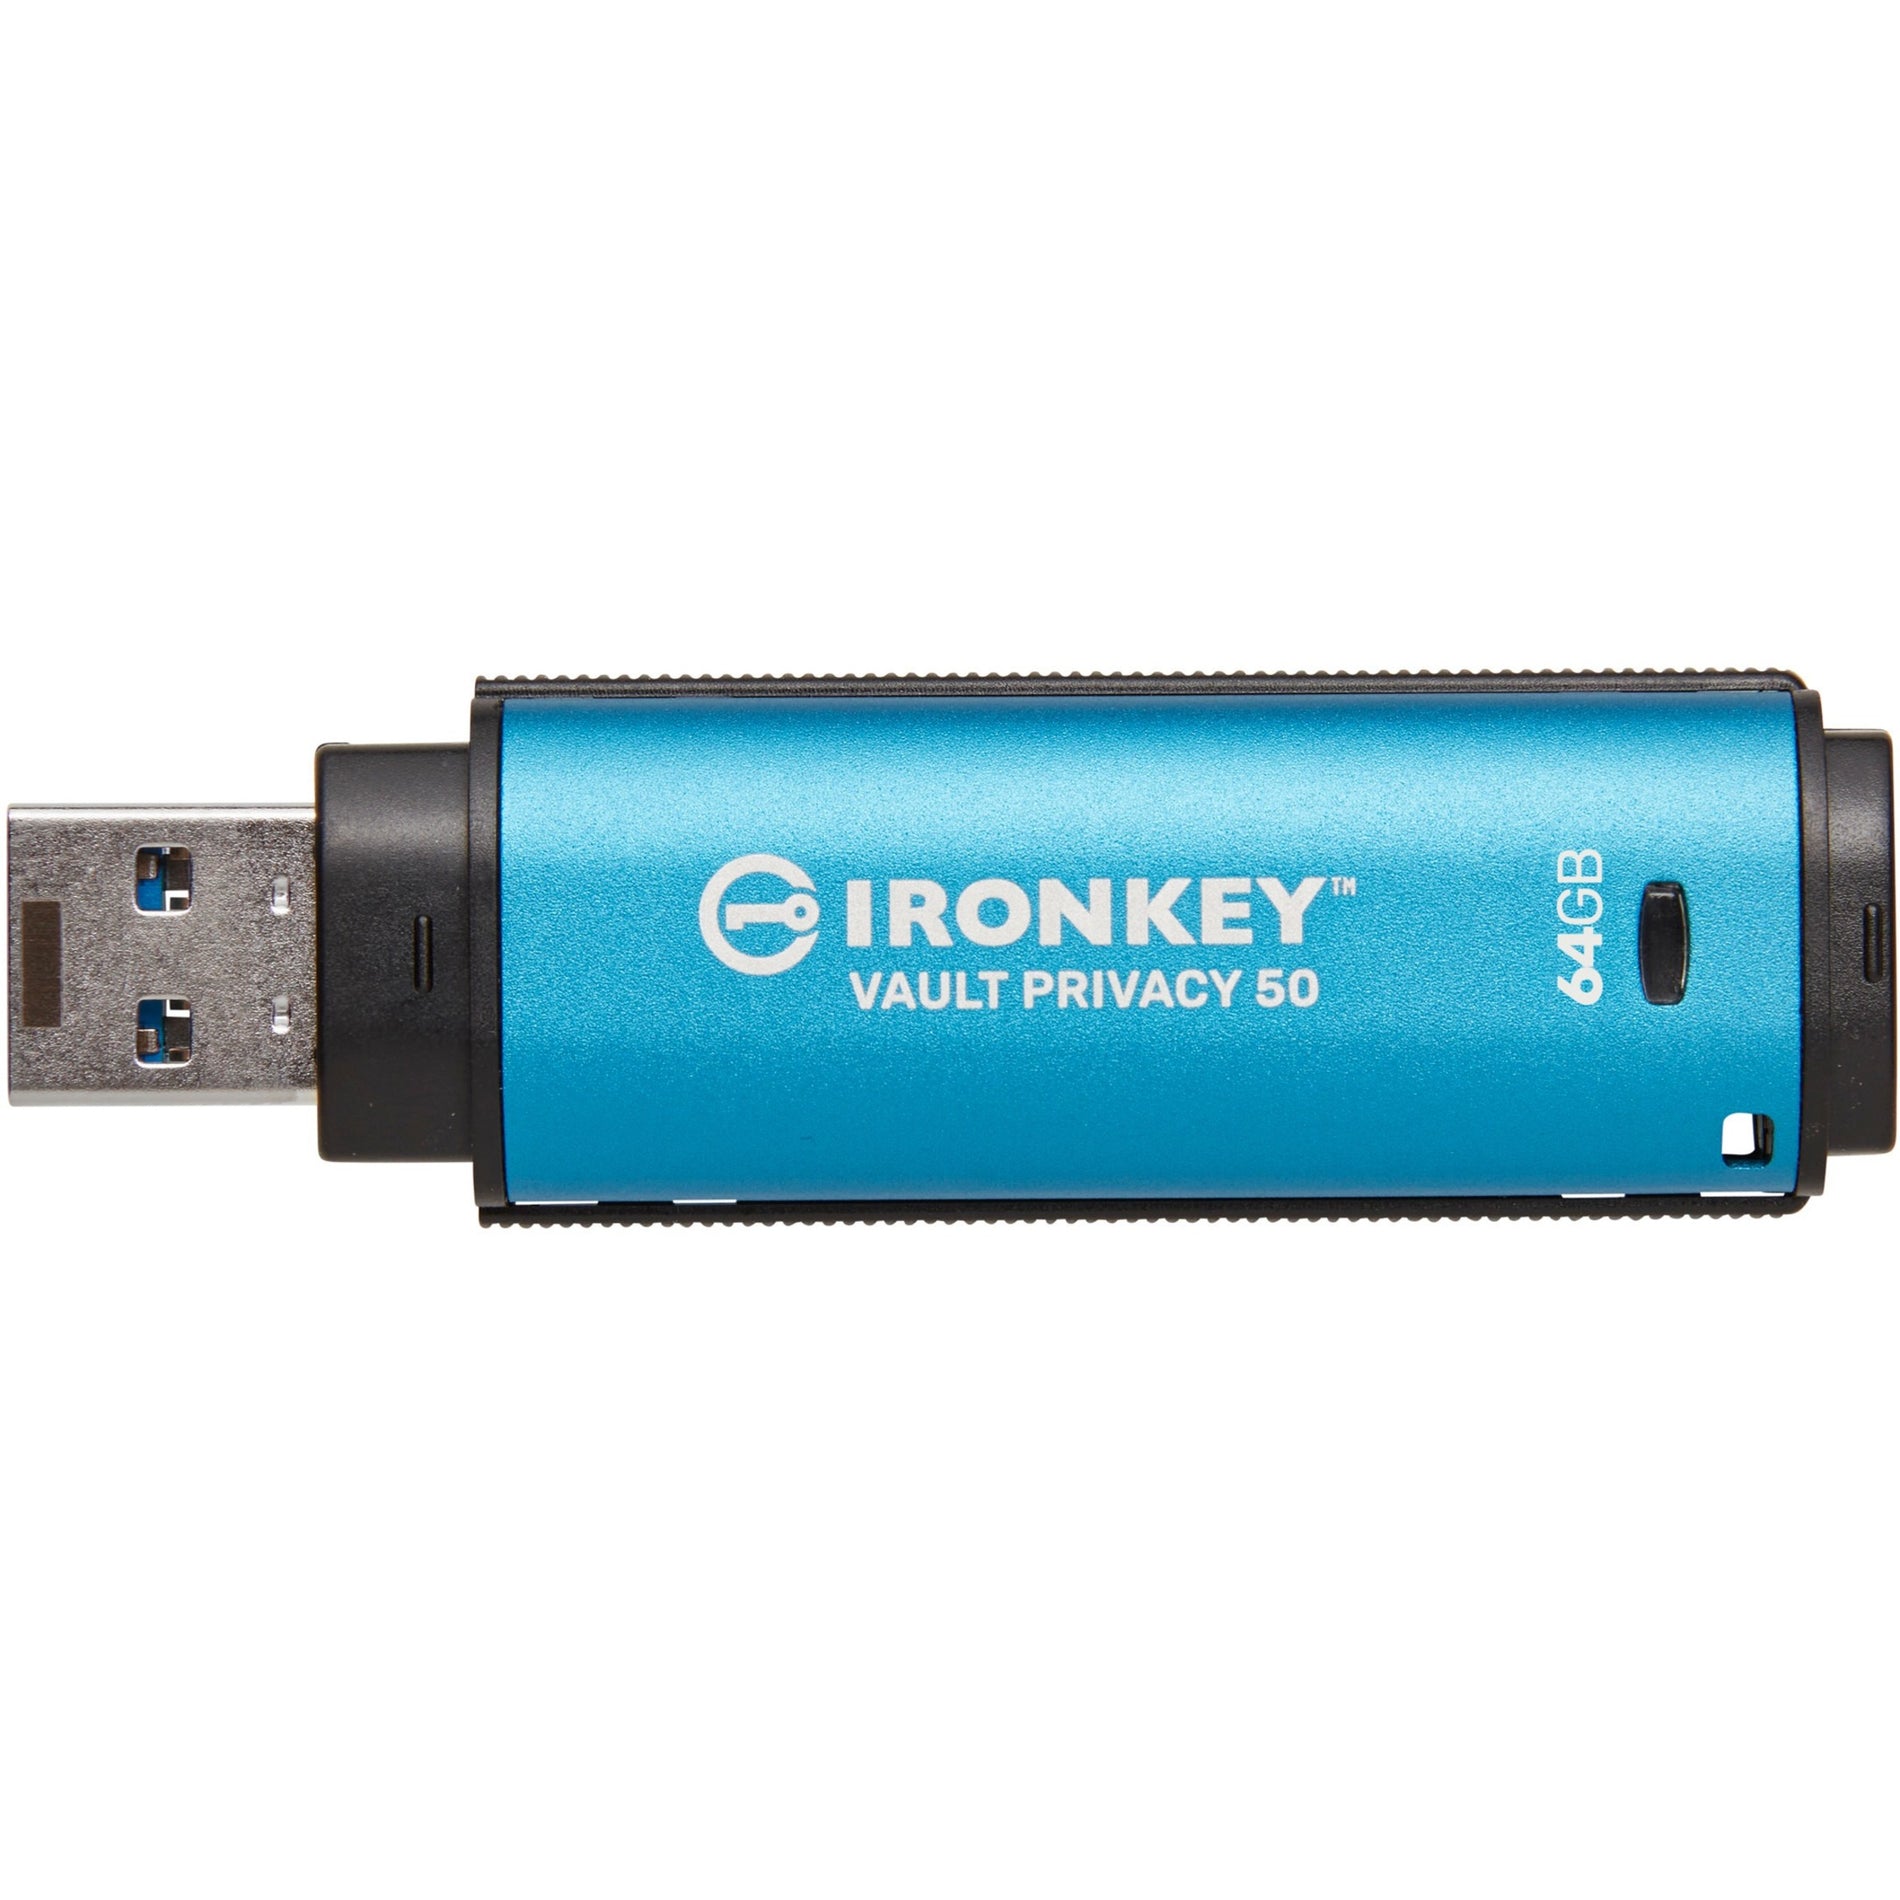 IronKey IKVP50/64GB سجن خزينة 50 سلسلة 64GB USB 3.2 (الجيل 1) نوع A محرك فلاش ، محمي بكلمة مرور ، تشفير AES بت 256 IronKey أيرون كي المسمى.